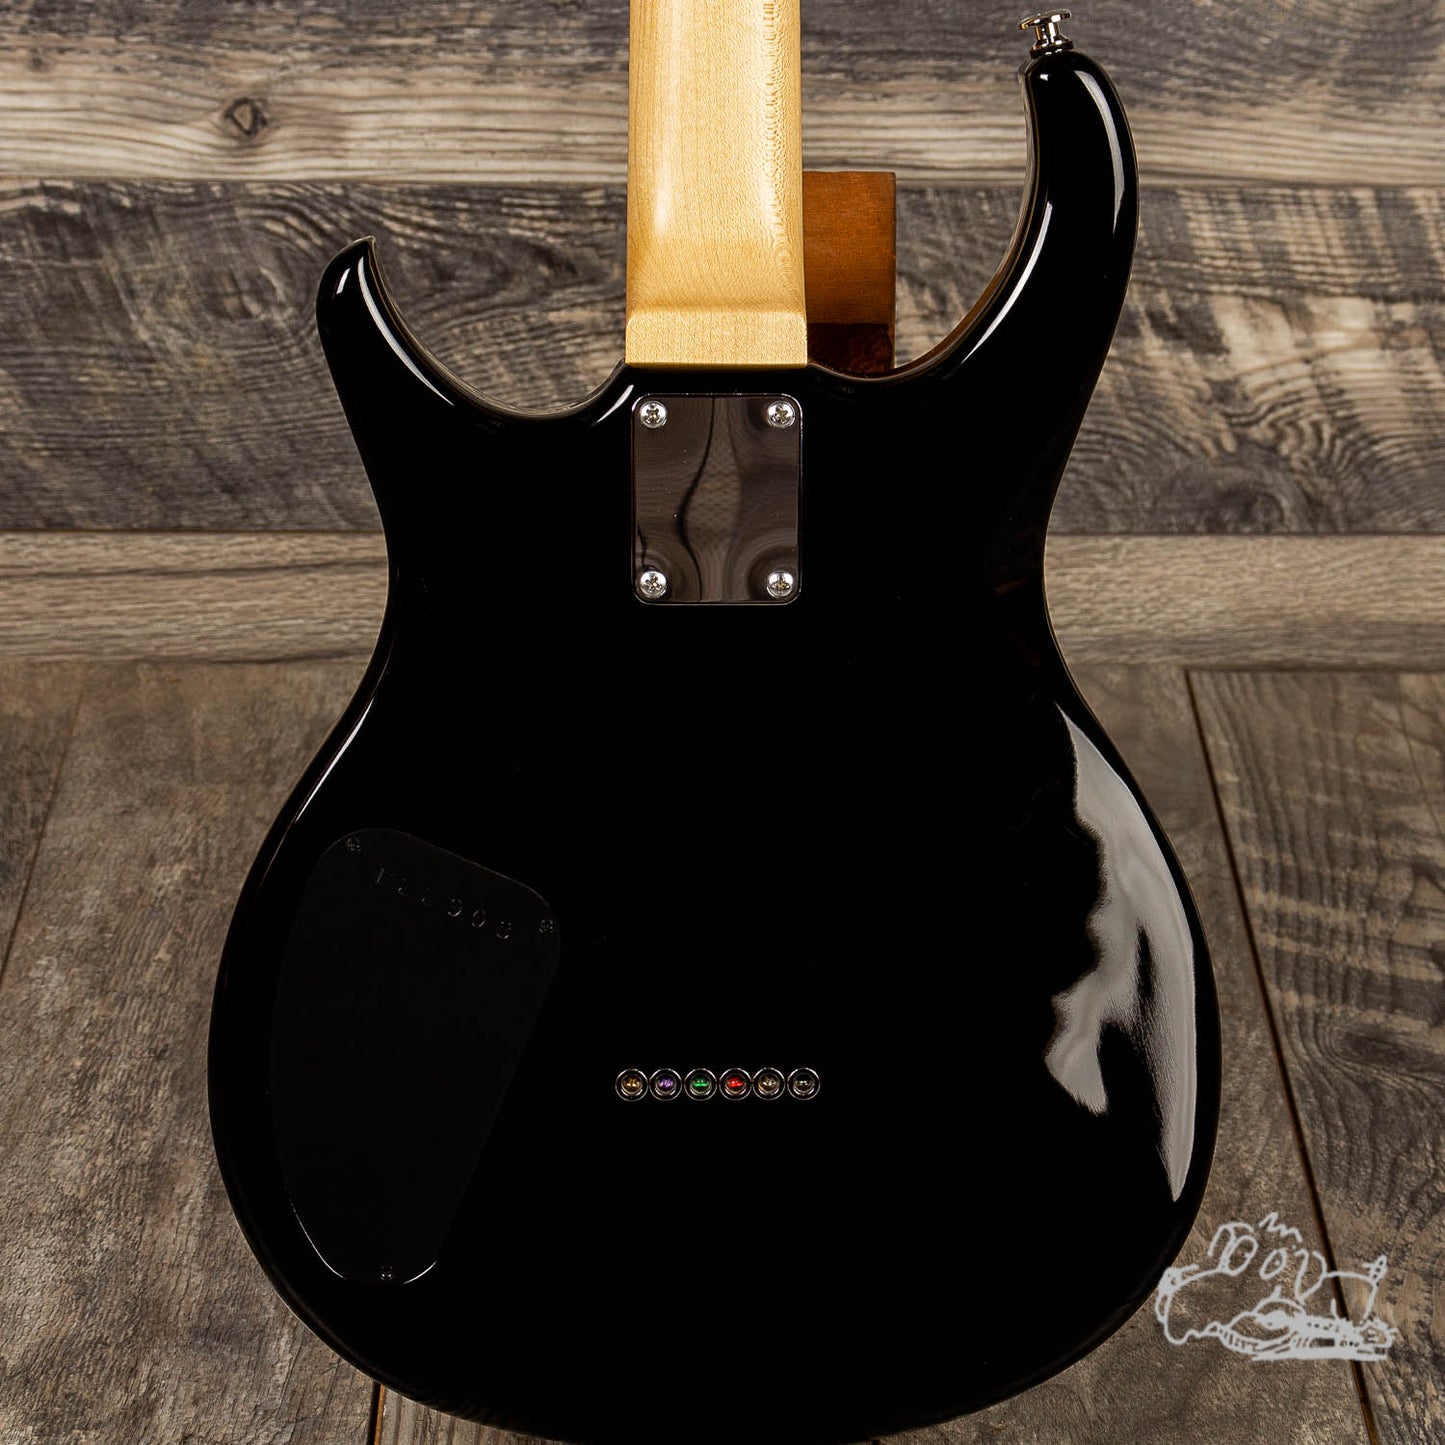 Michael Rowan Custom Guitars - Texas Twister (Red)